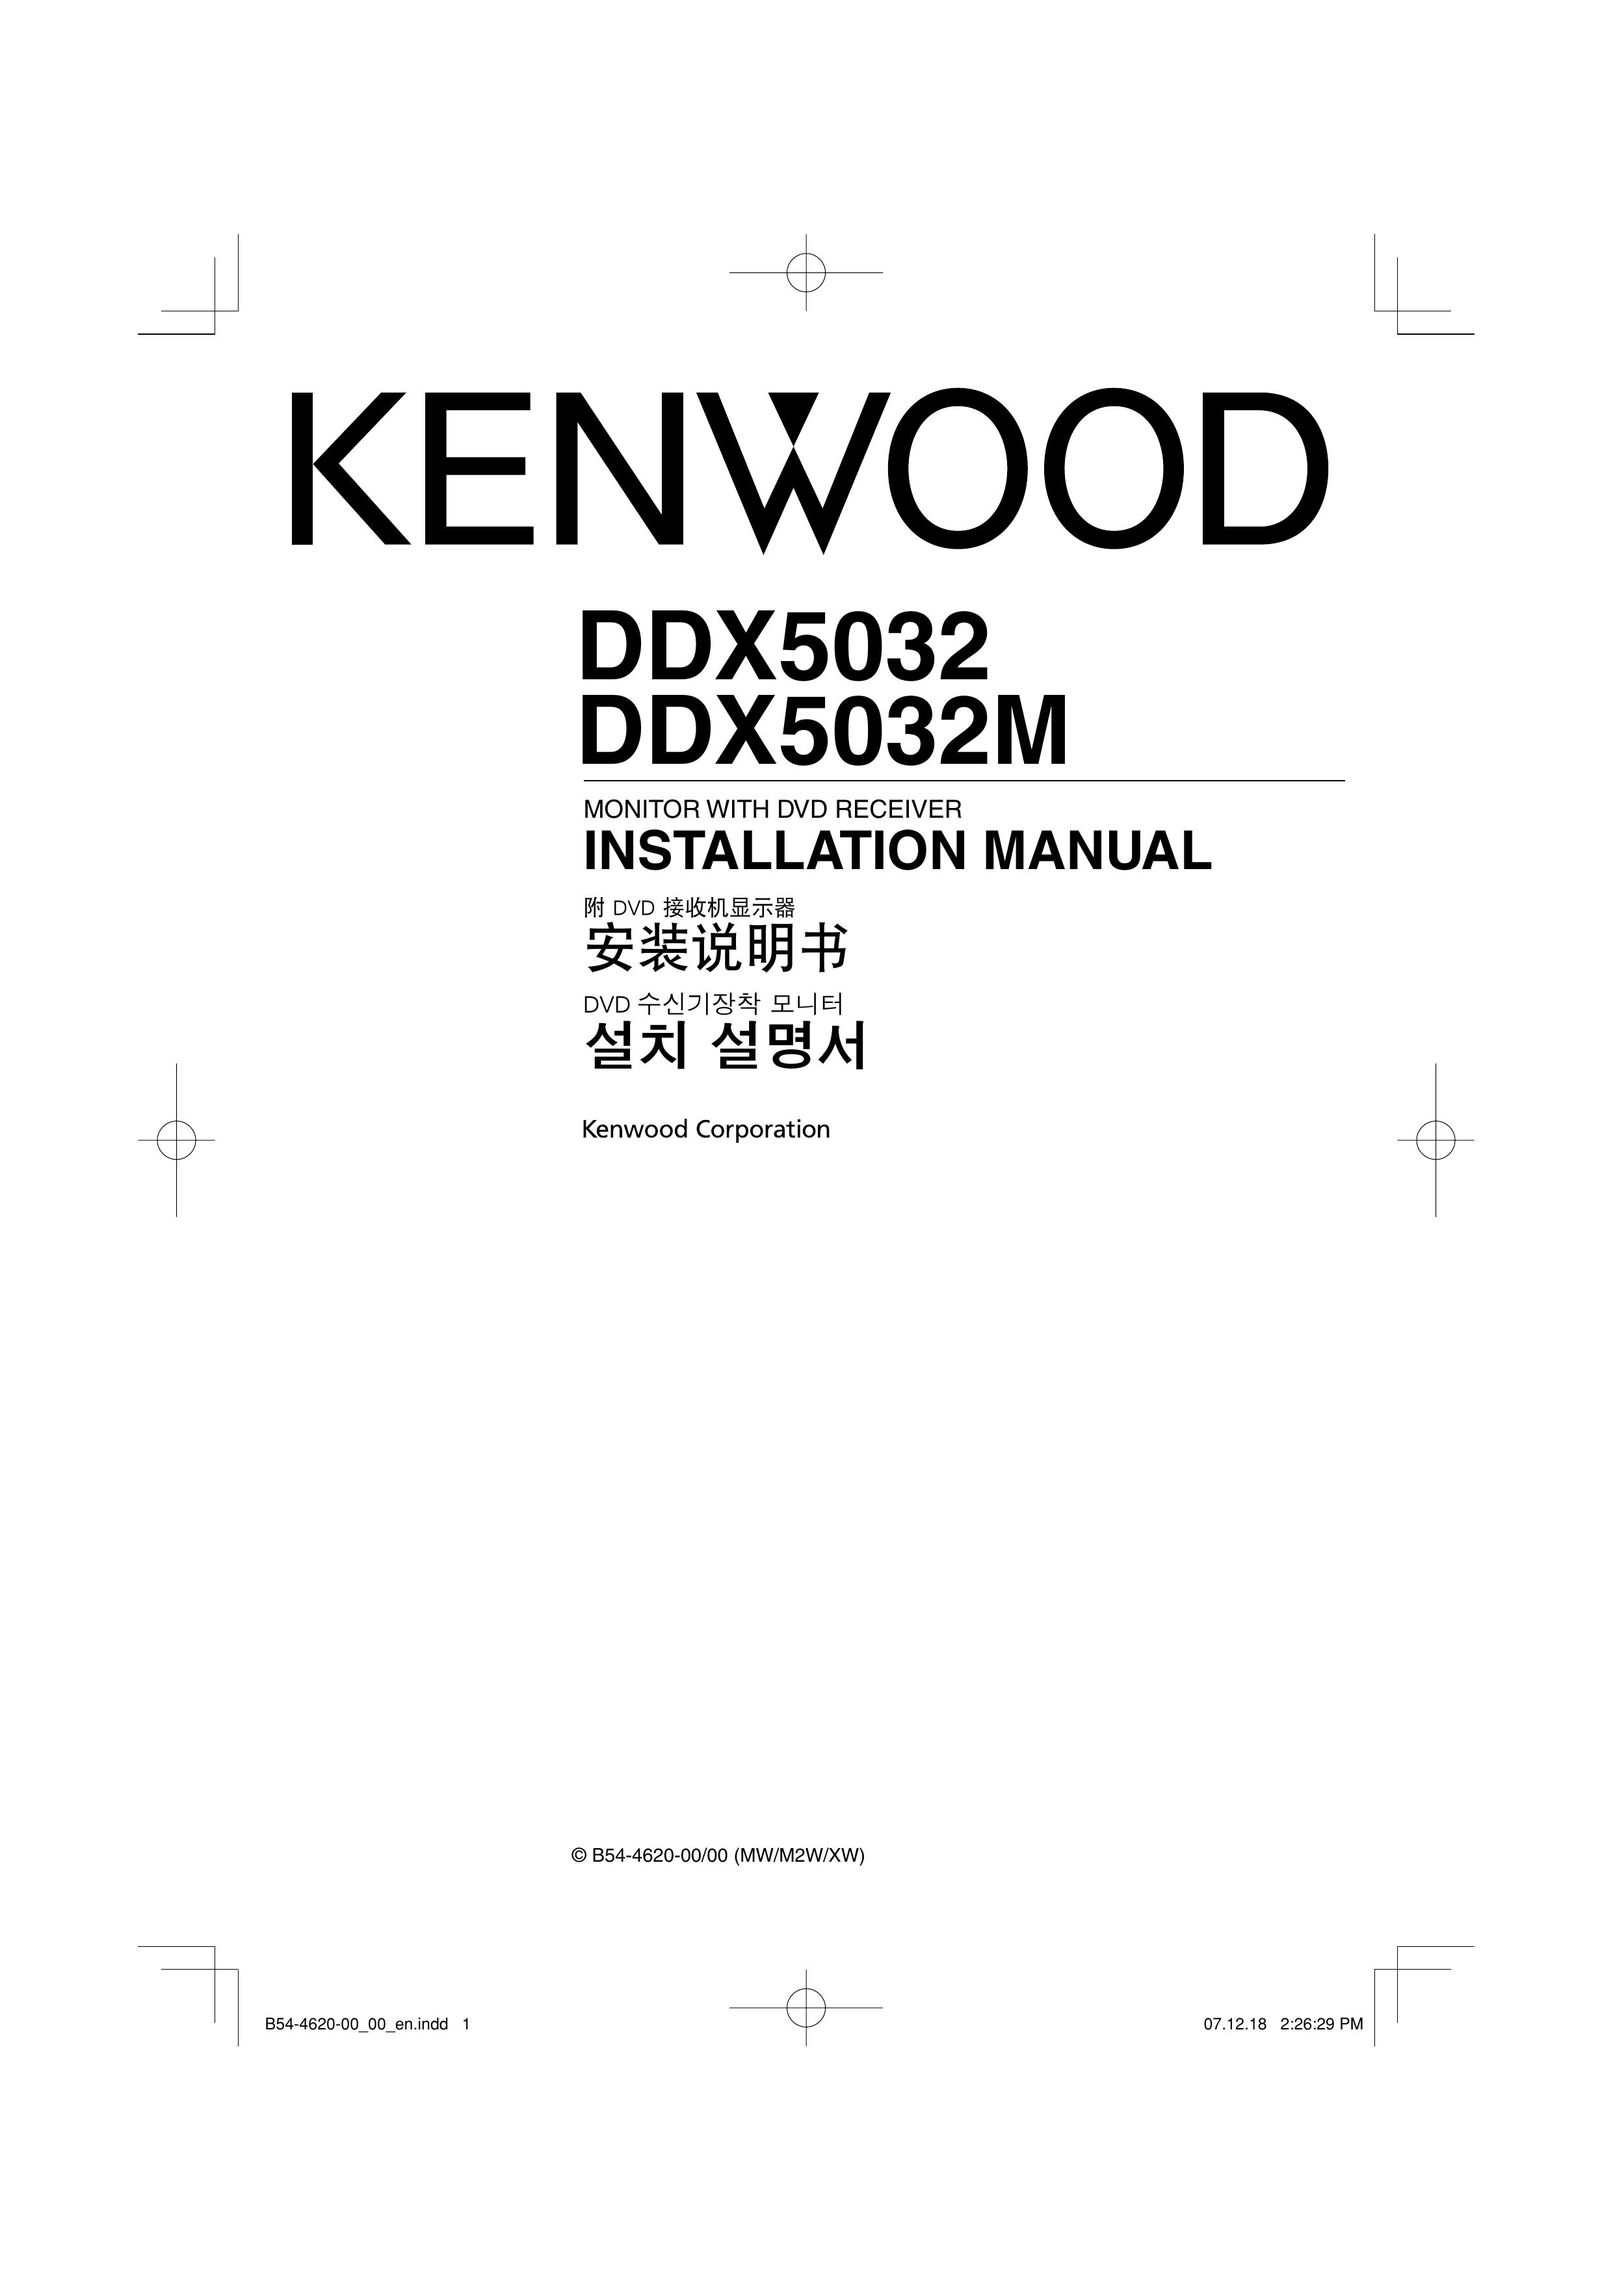 Kenwood DDX5032M Car Video System User Manual